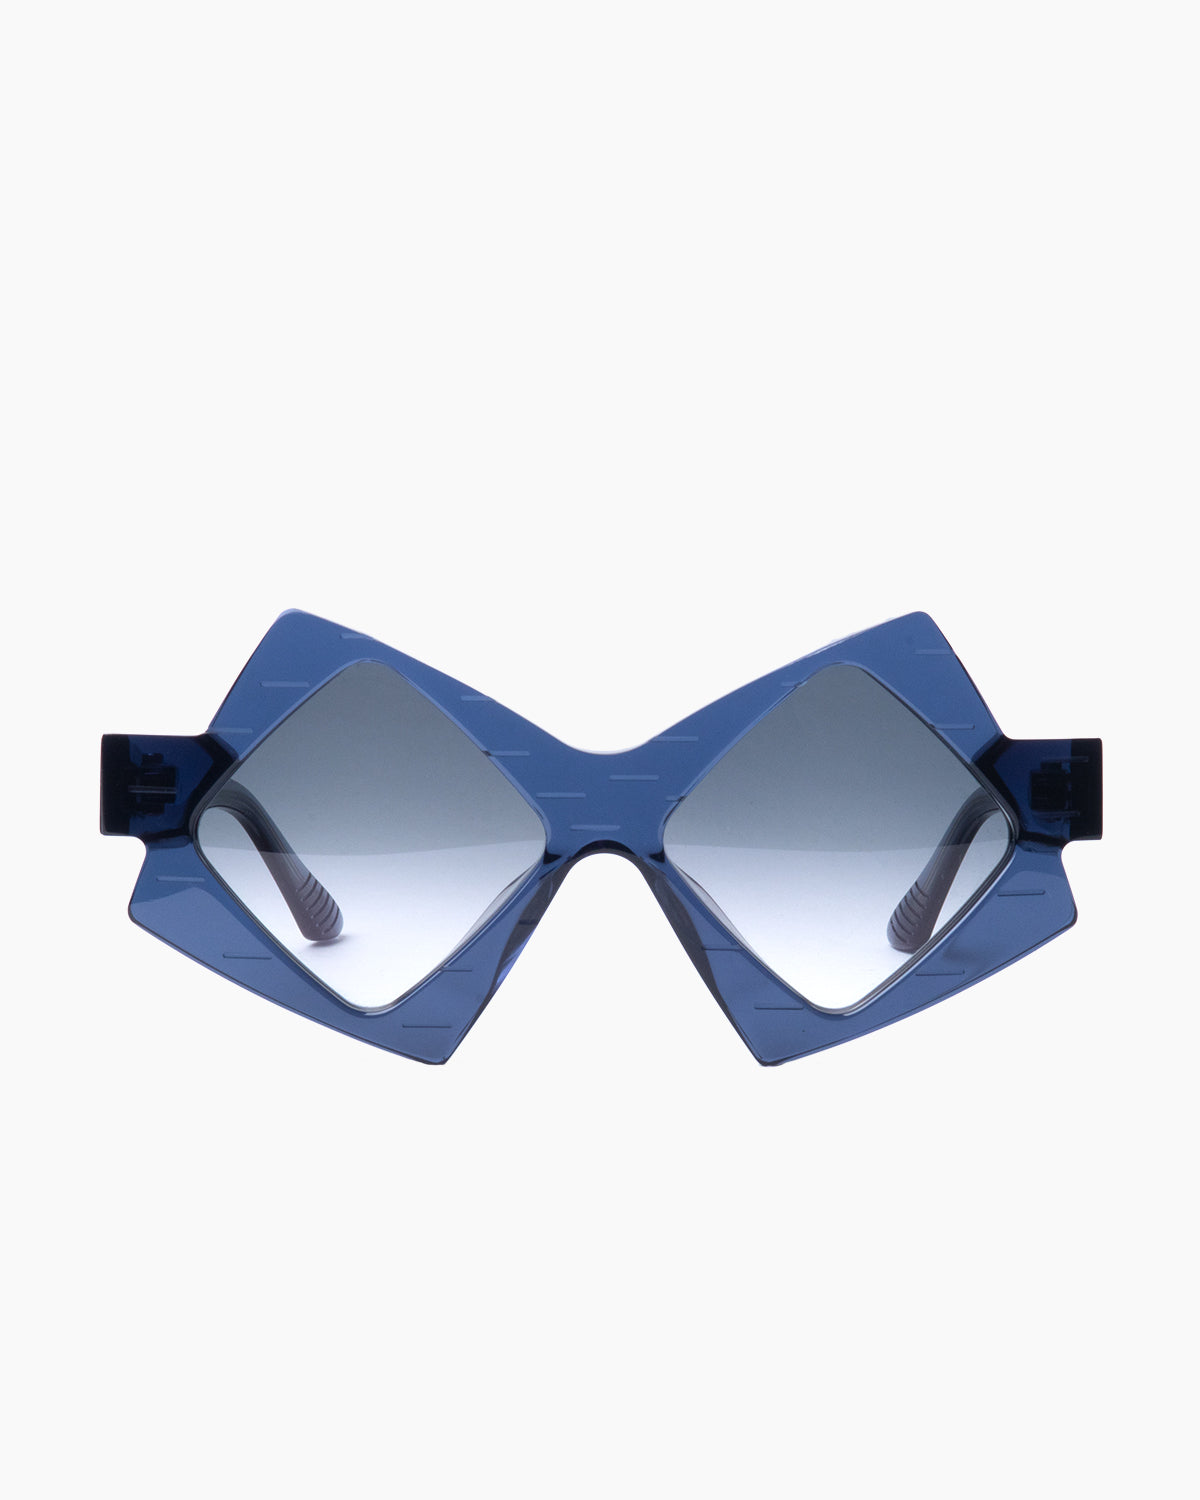 Yohji Yamamoto - Slook004 - m003 | glasses bar:  Marie-Sophie Dion